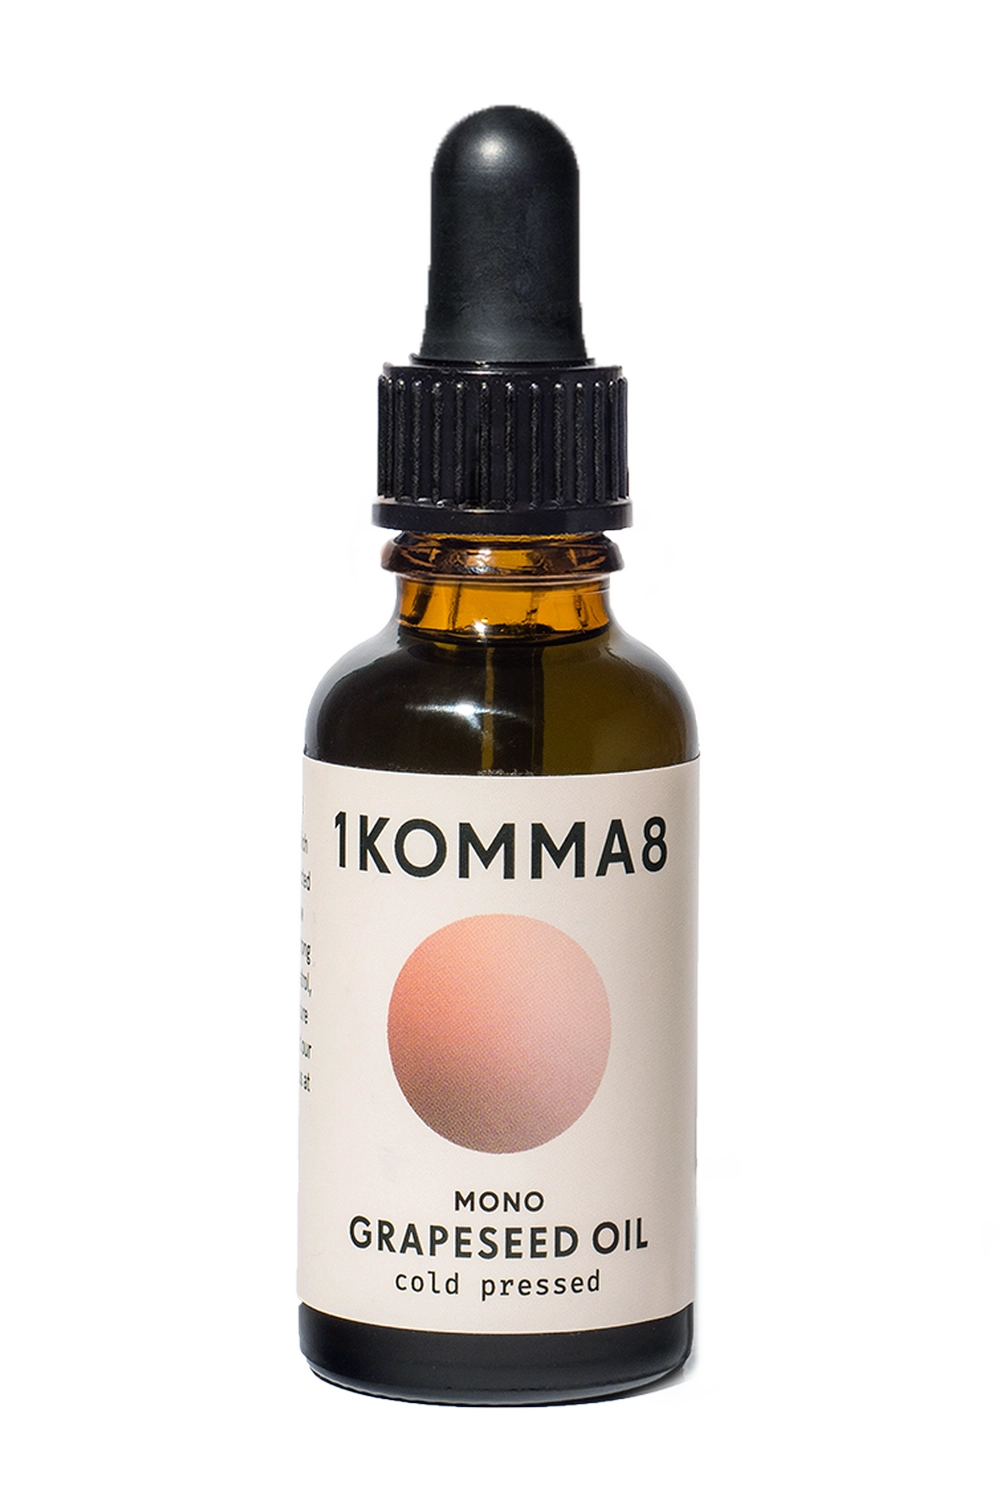 Grape seed oil cold pressed - 1komma8